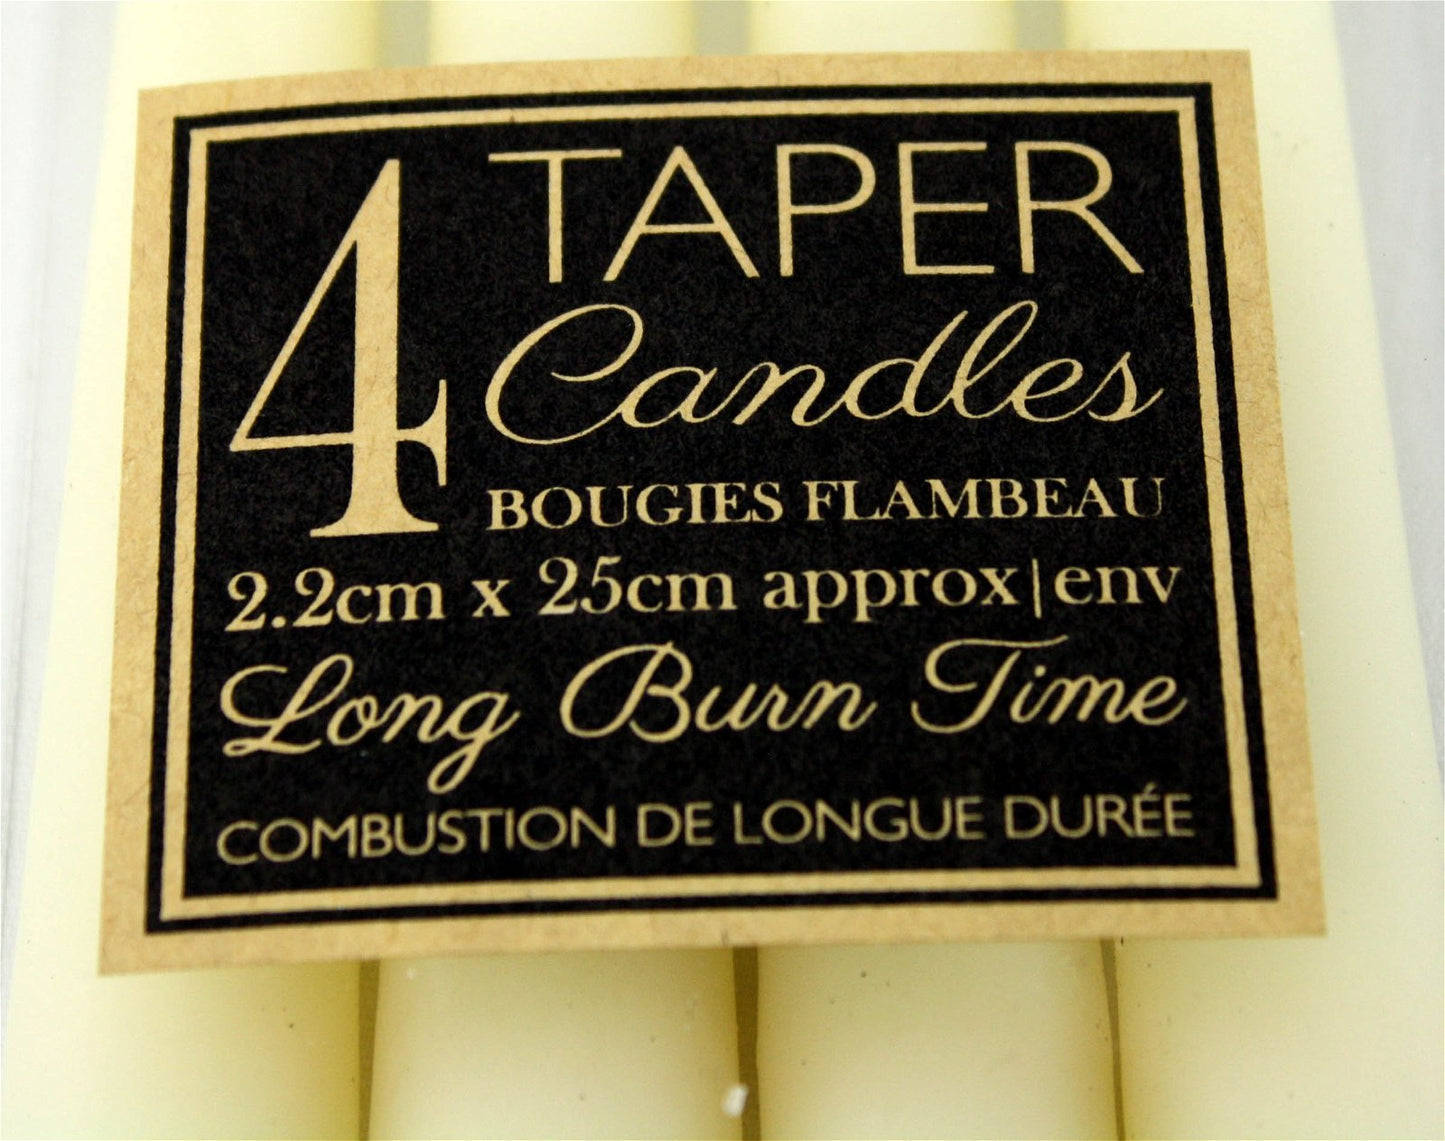 Set Of 4 Ivory Taper Candles - Kaftan direct